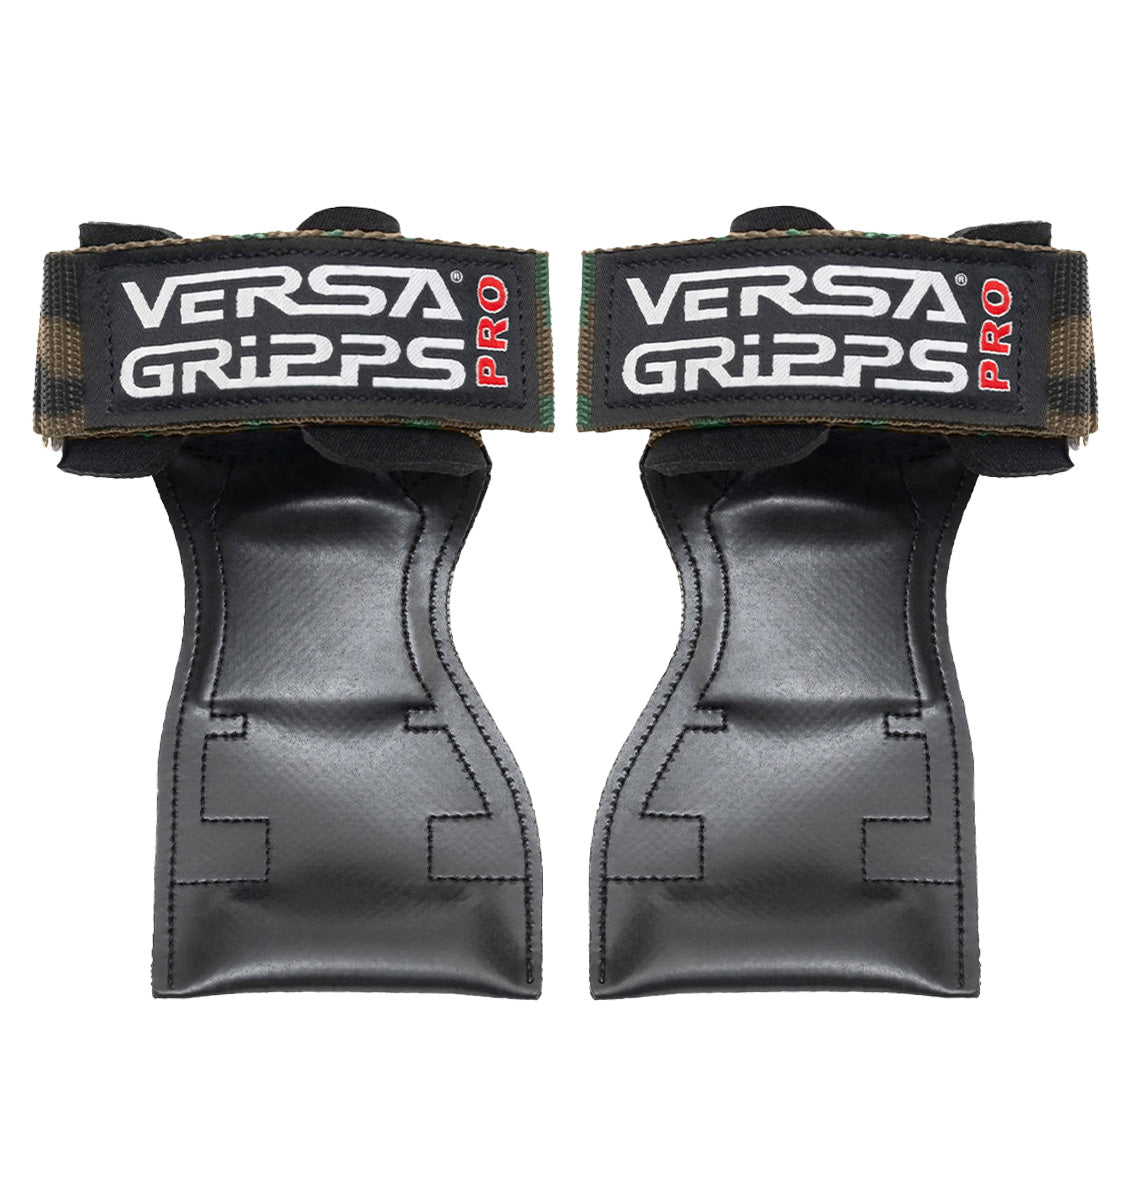 Versa Gripps® PRO Series Lifting Straps - Camo - 8